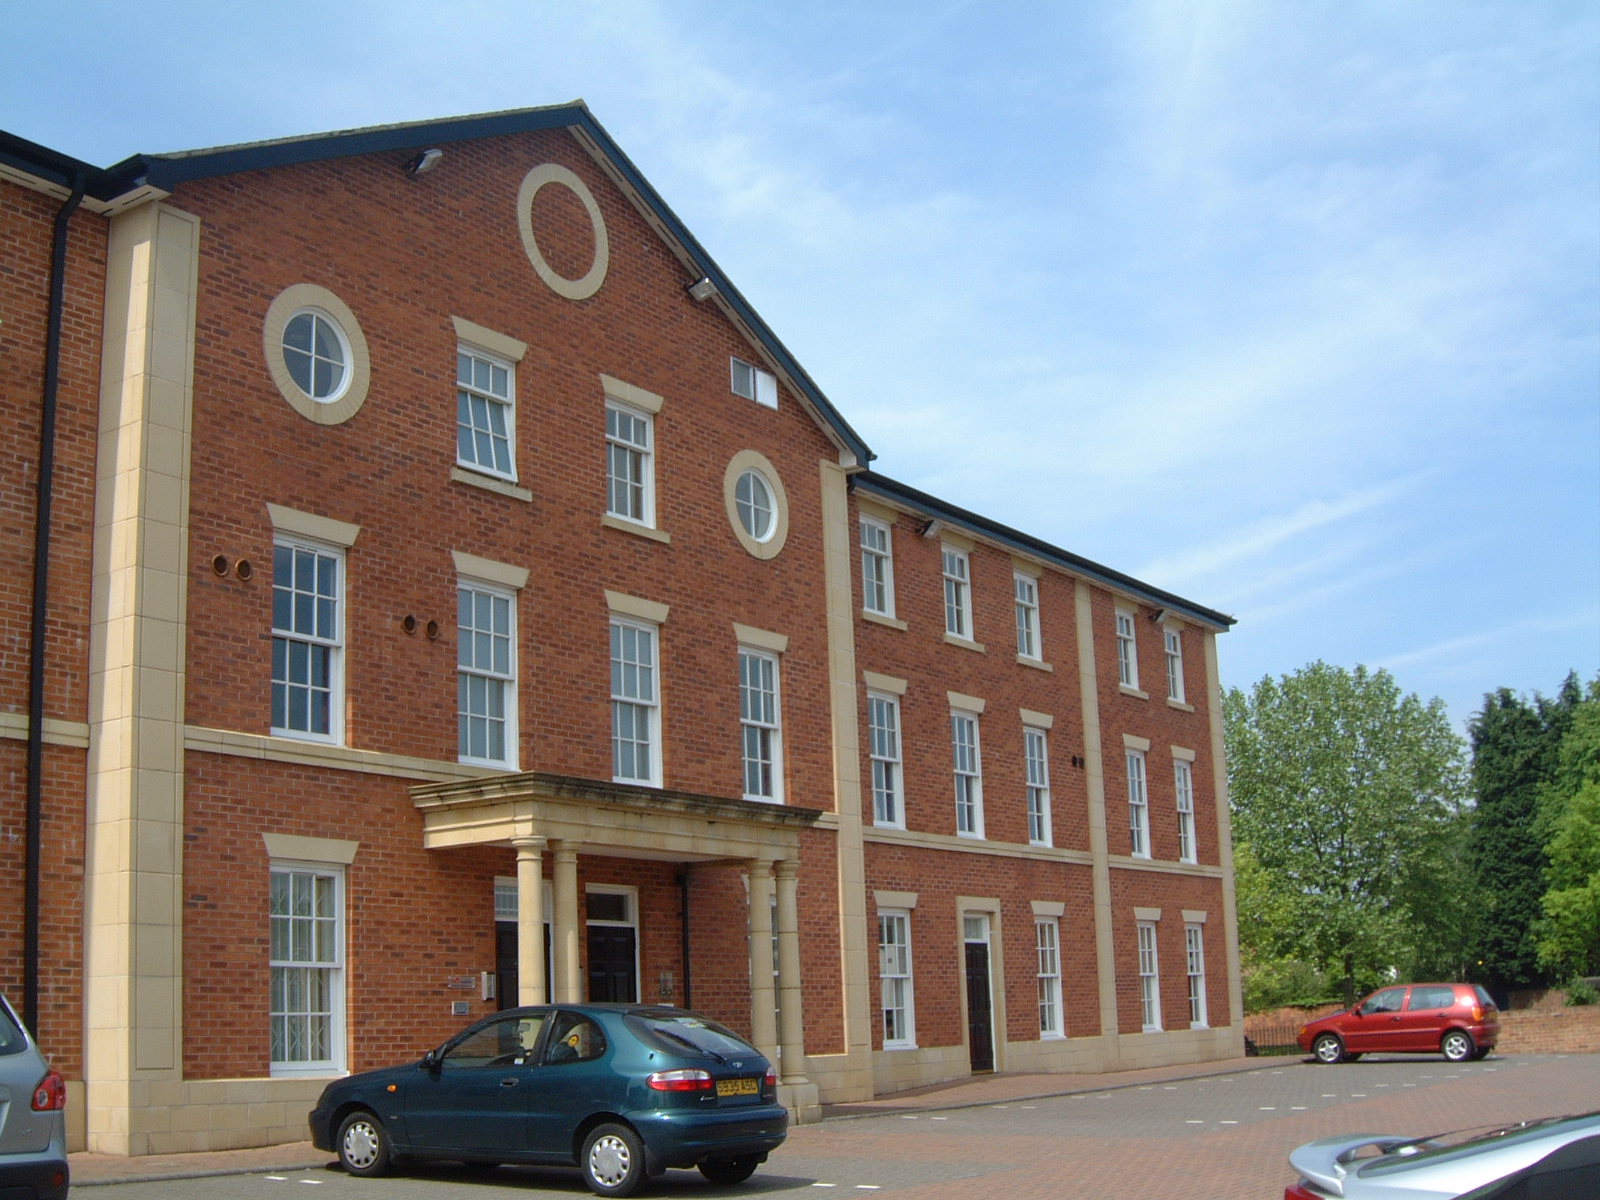 Gleneagles House, Vernon Gate, Derby, East Midlands